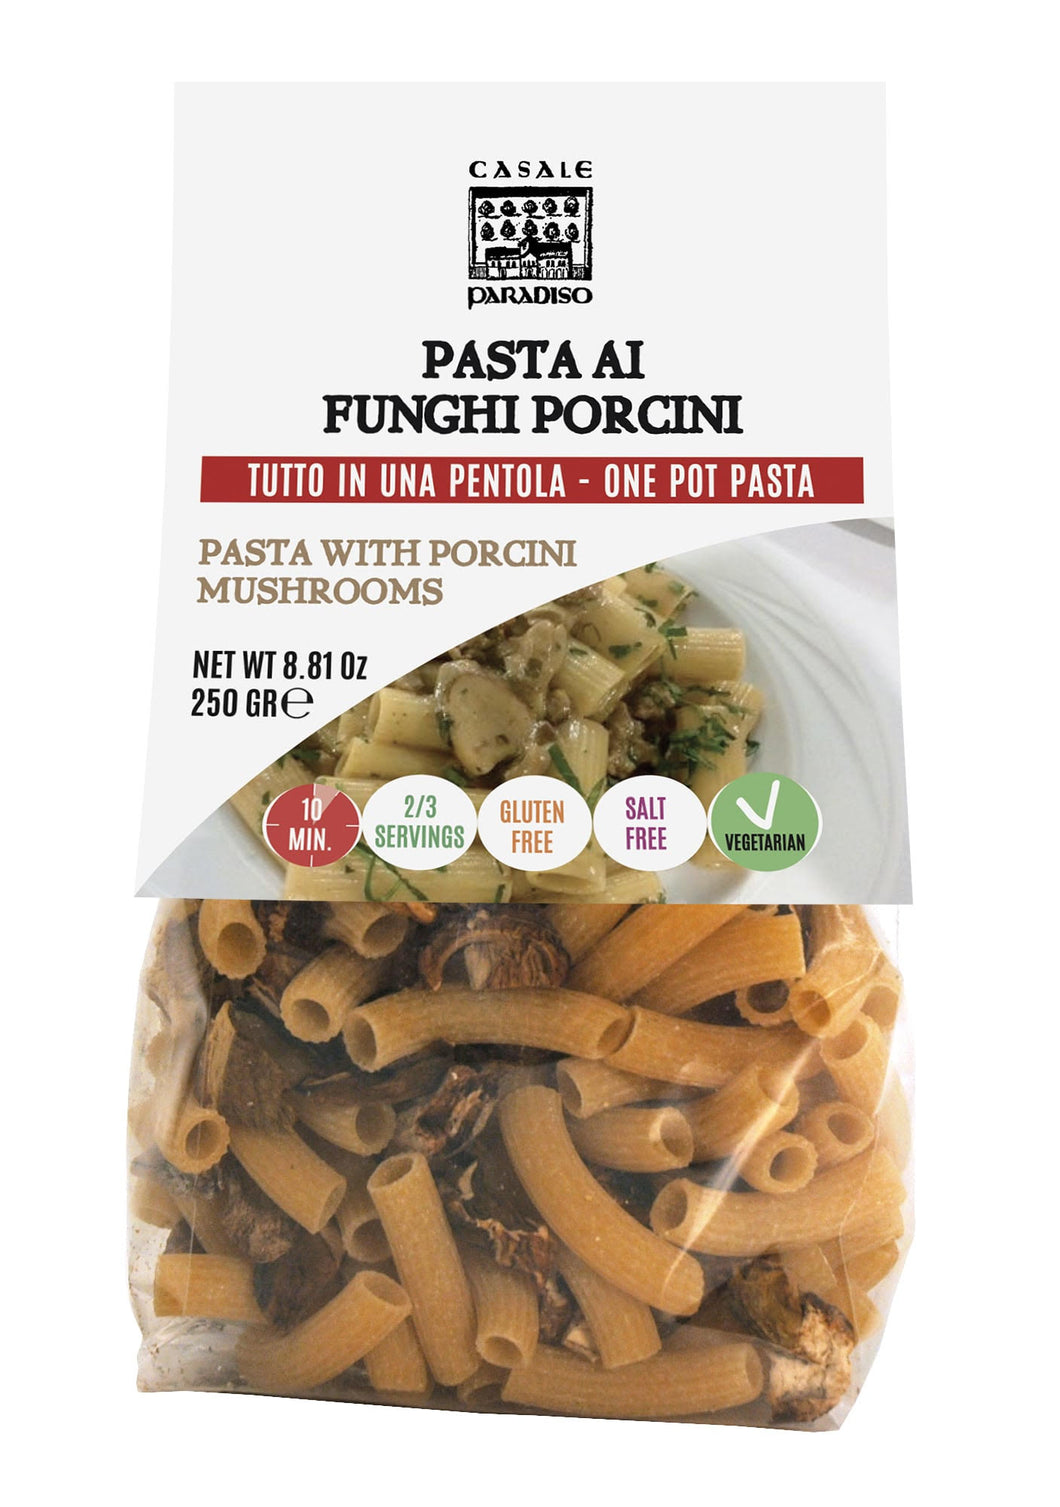 Pasta Ai Funghi Porcini - Pasta with Porcini Mushrooms by Casale Paradiso